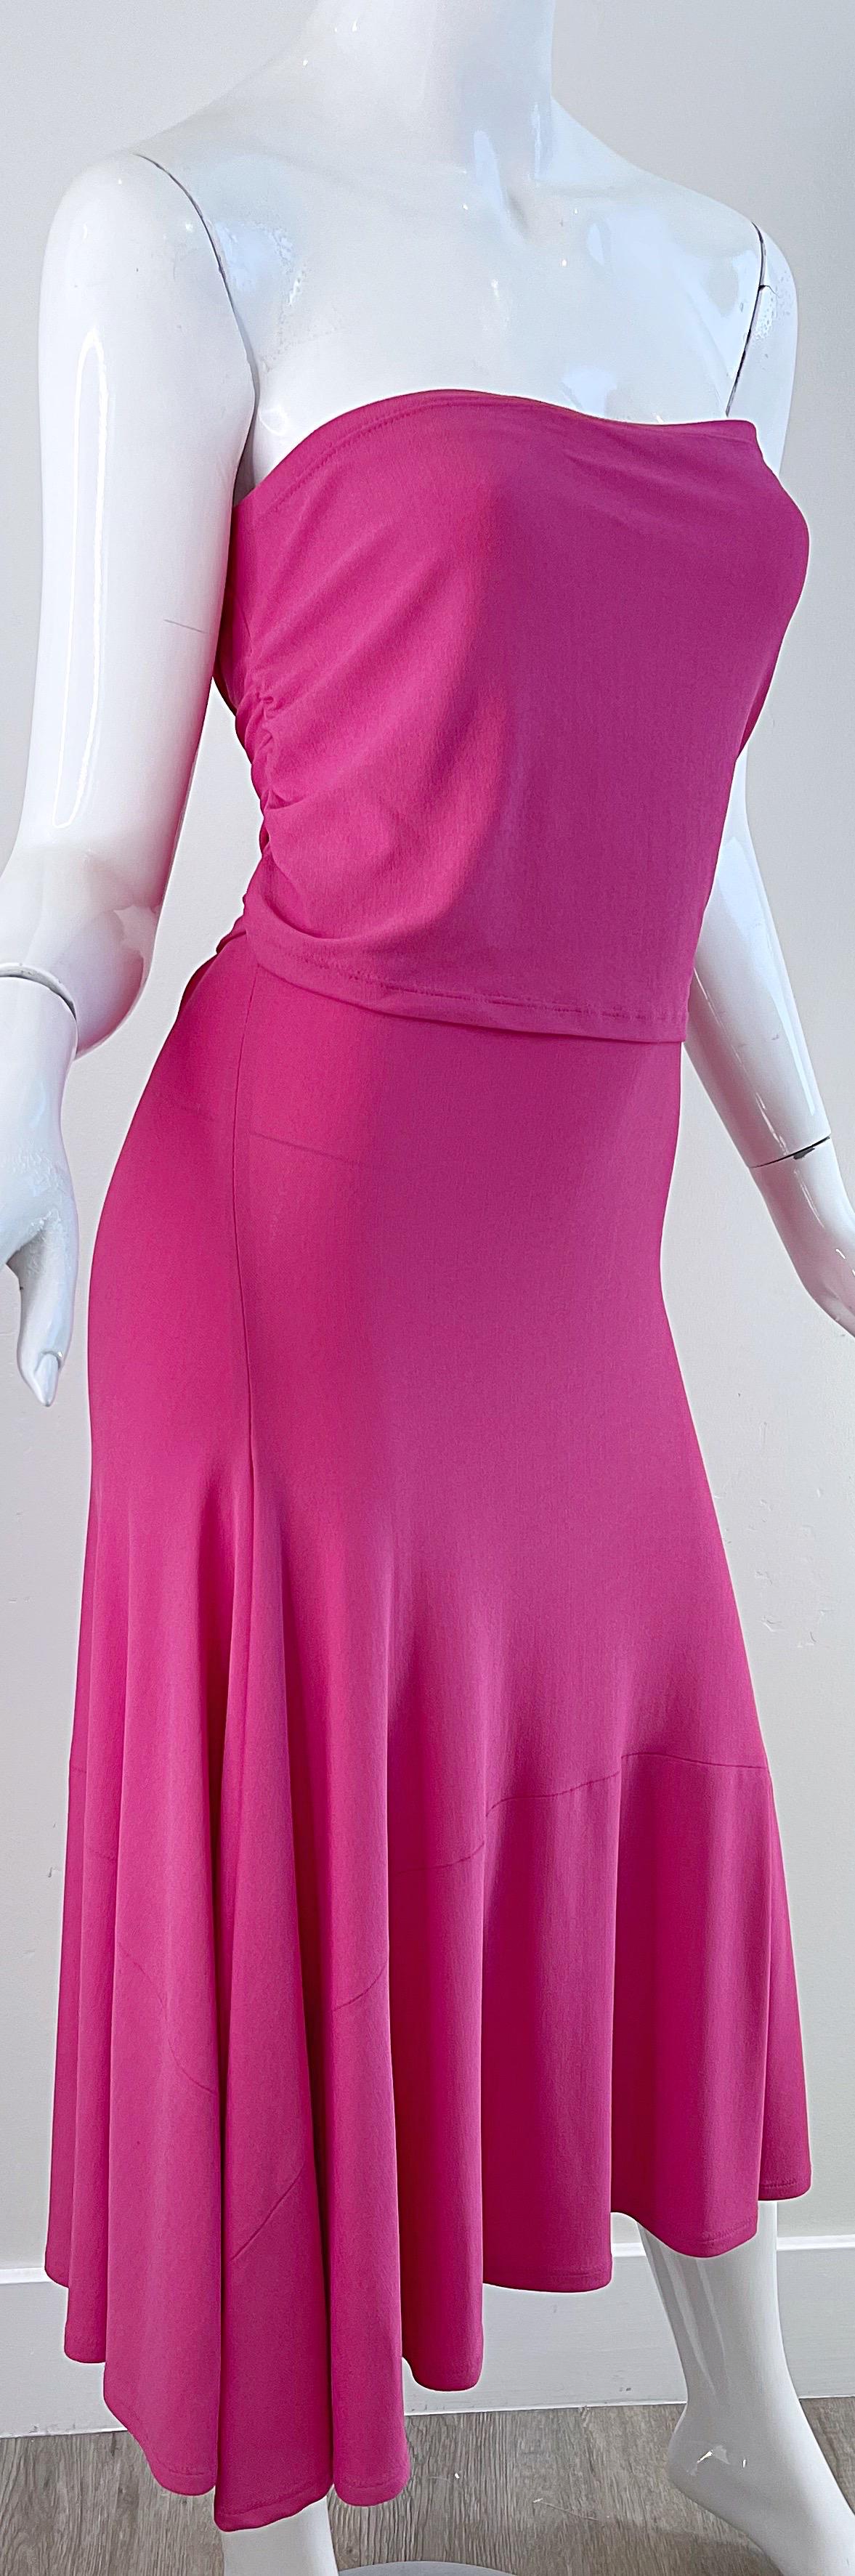 NWT Donna Karan Resort 2016 Hot Pink Size Medium Strapless Tube Dress For Sale 5